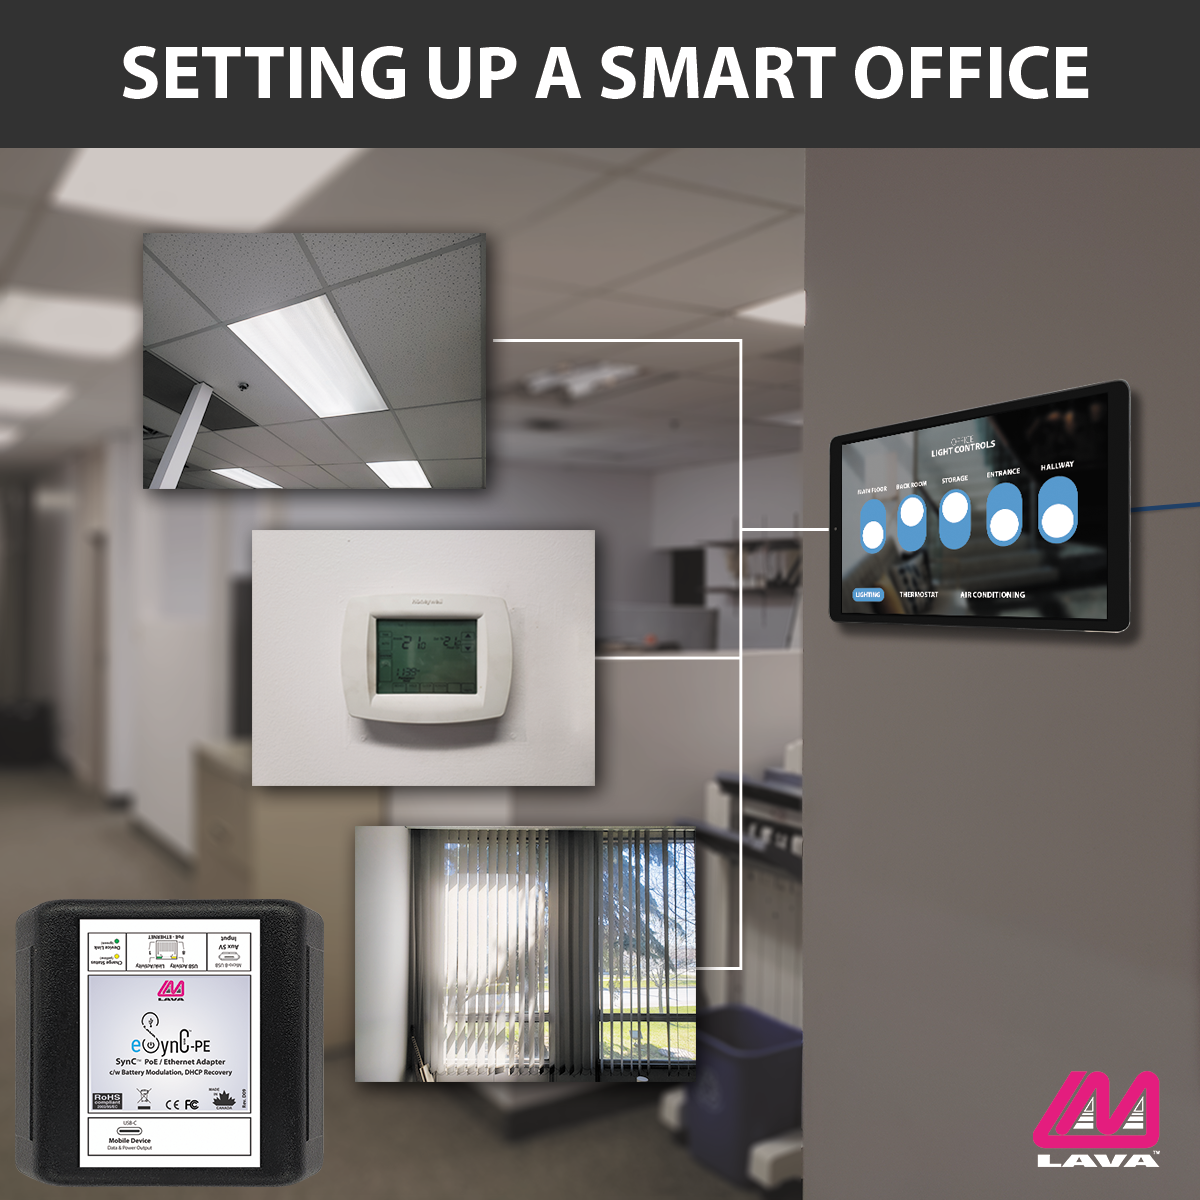 Smart Office setup with eSynC PE